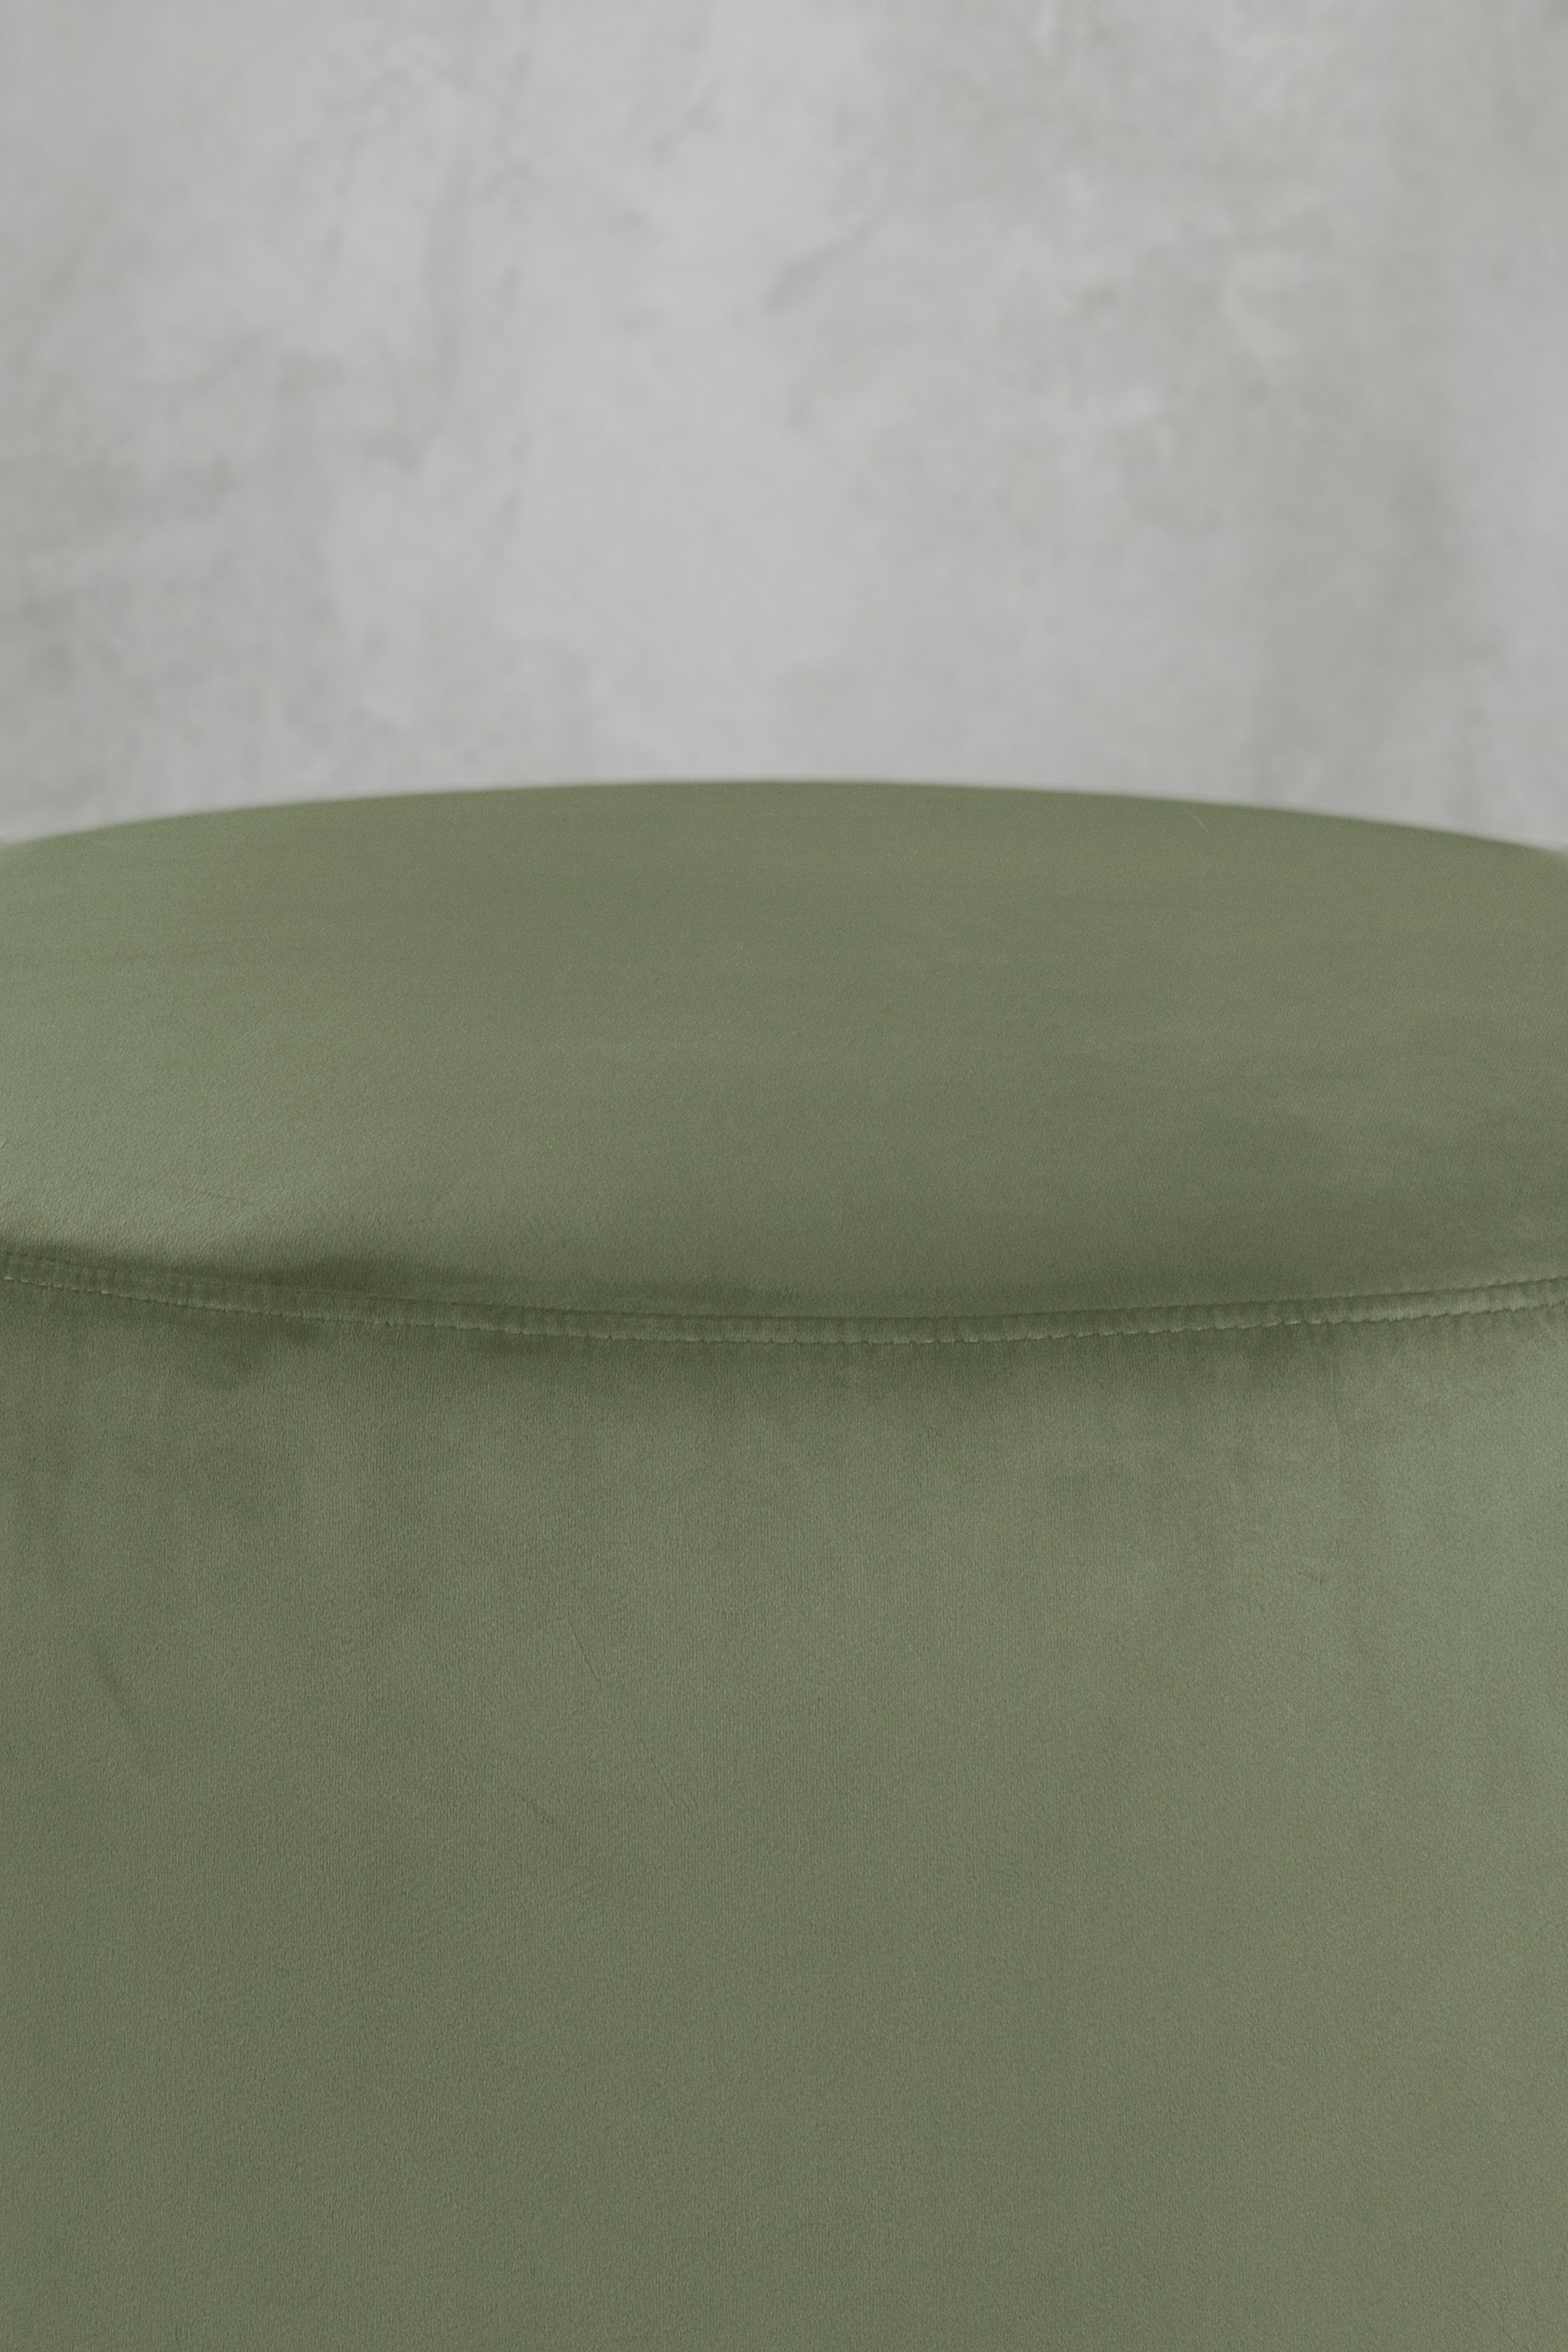 Samtbezug carla&marge Pouf Sitzhocker mit cm), in Grün Green Epomella schmuseweichem (47x55x55 Seaweed